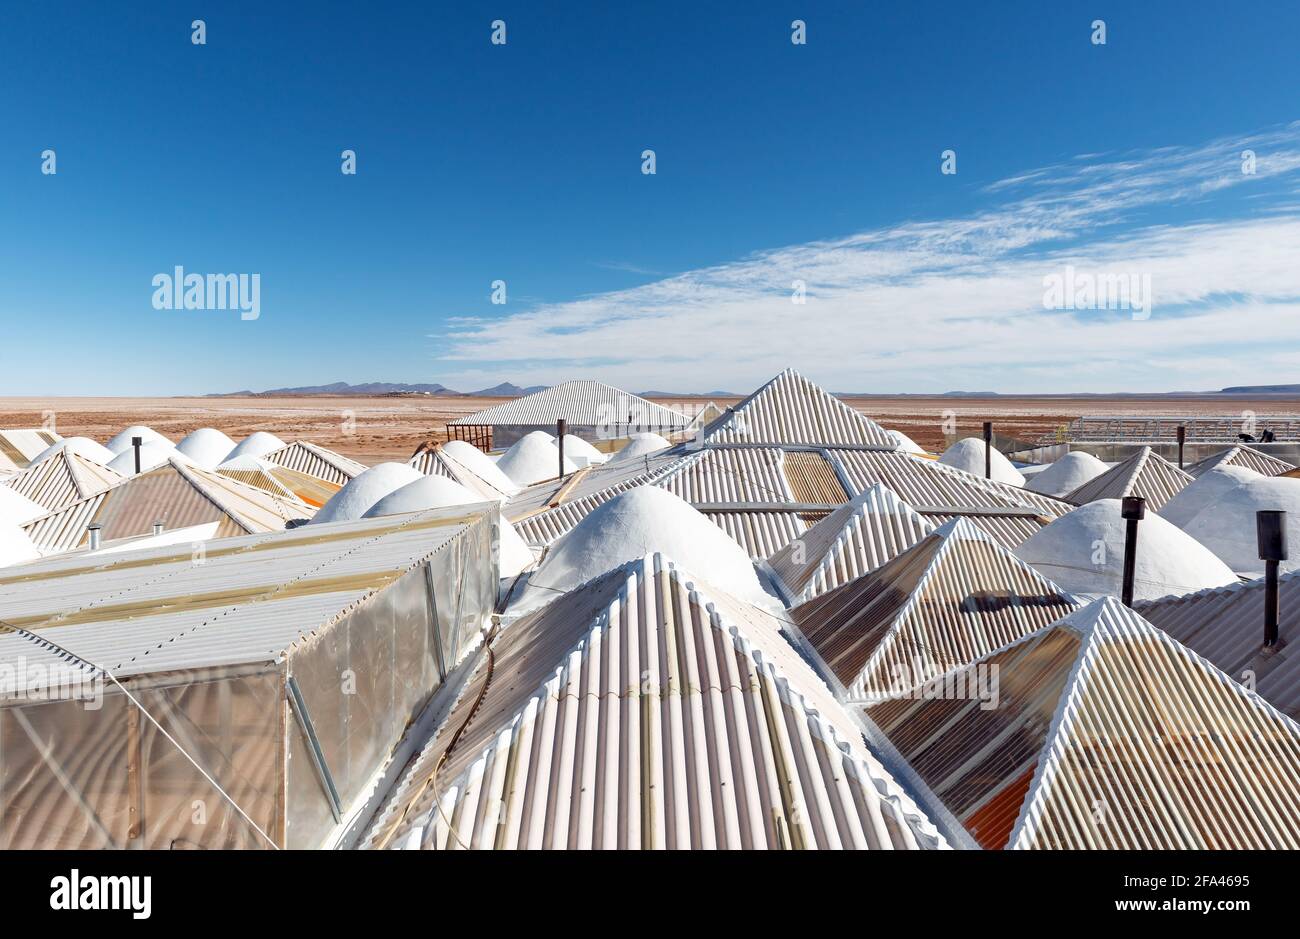 Roof of a salt hotel with landscape, Uyuni salt flat desert, Bolivia. Stock Photo